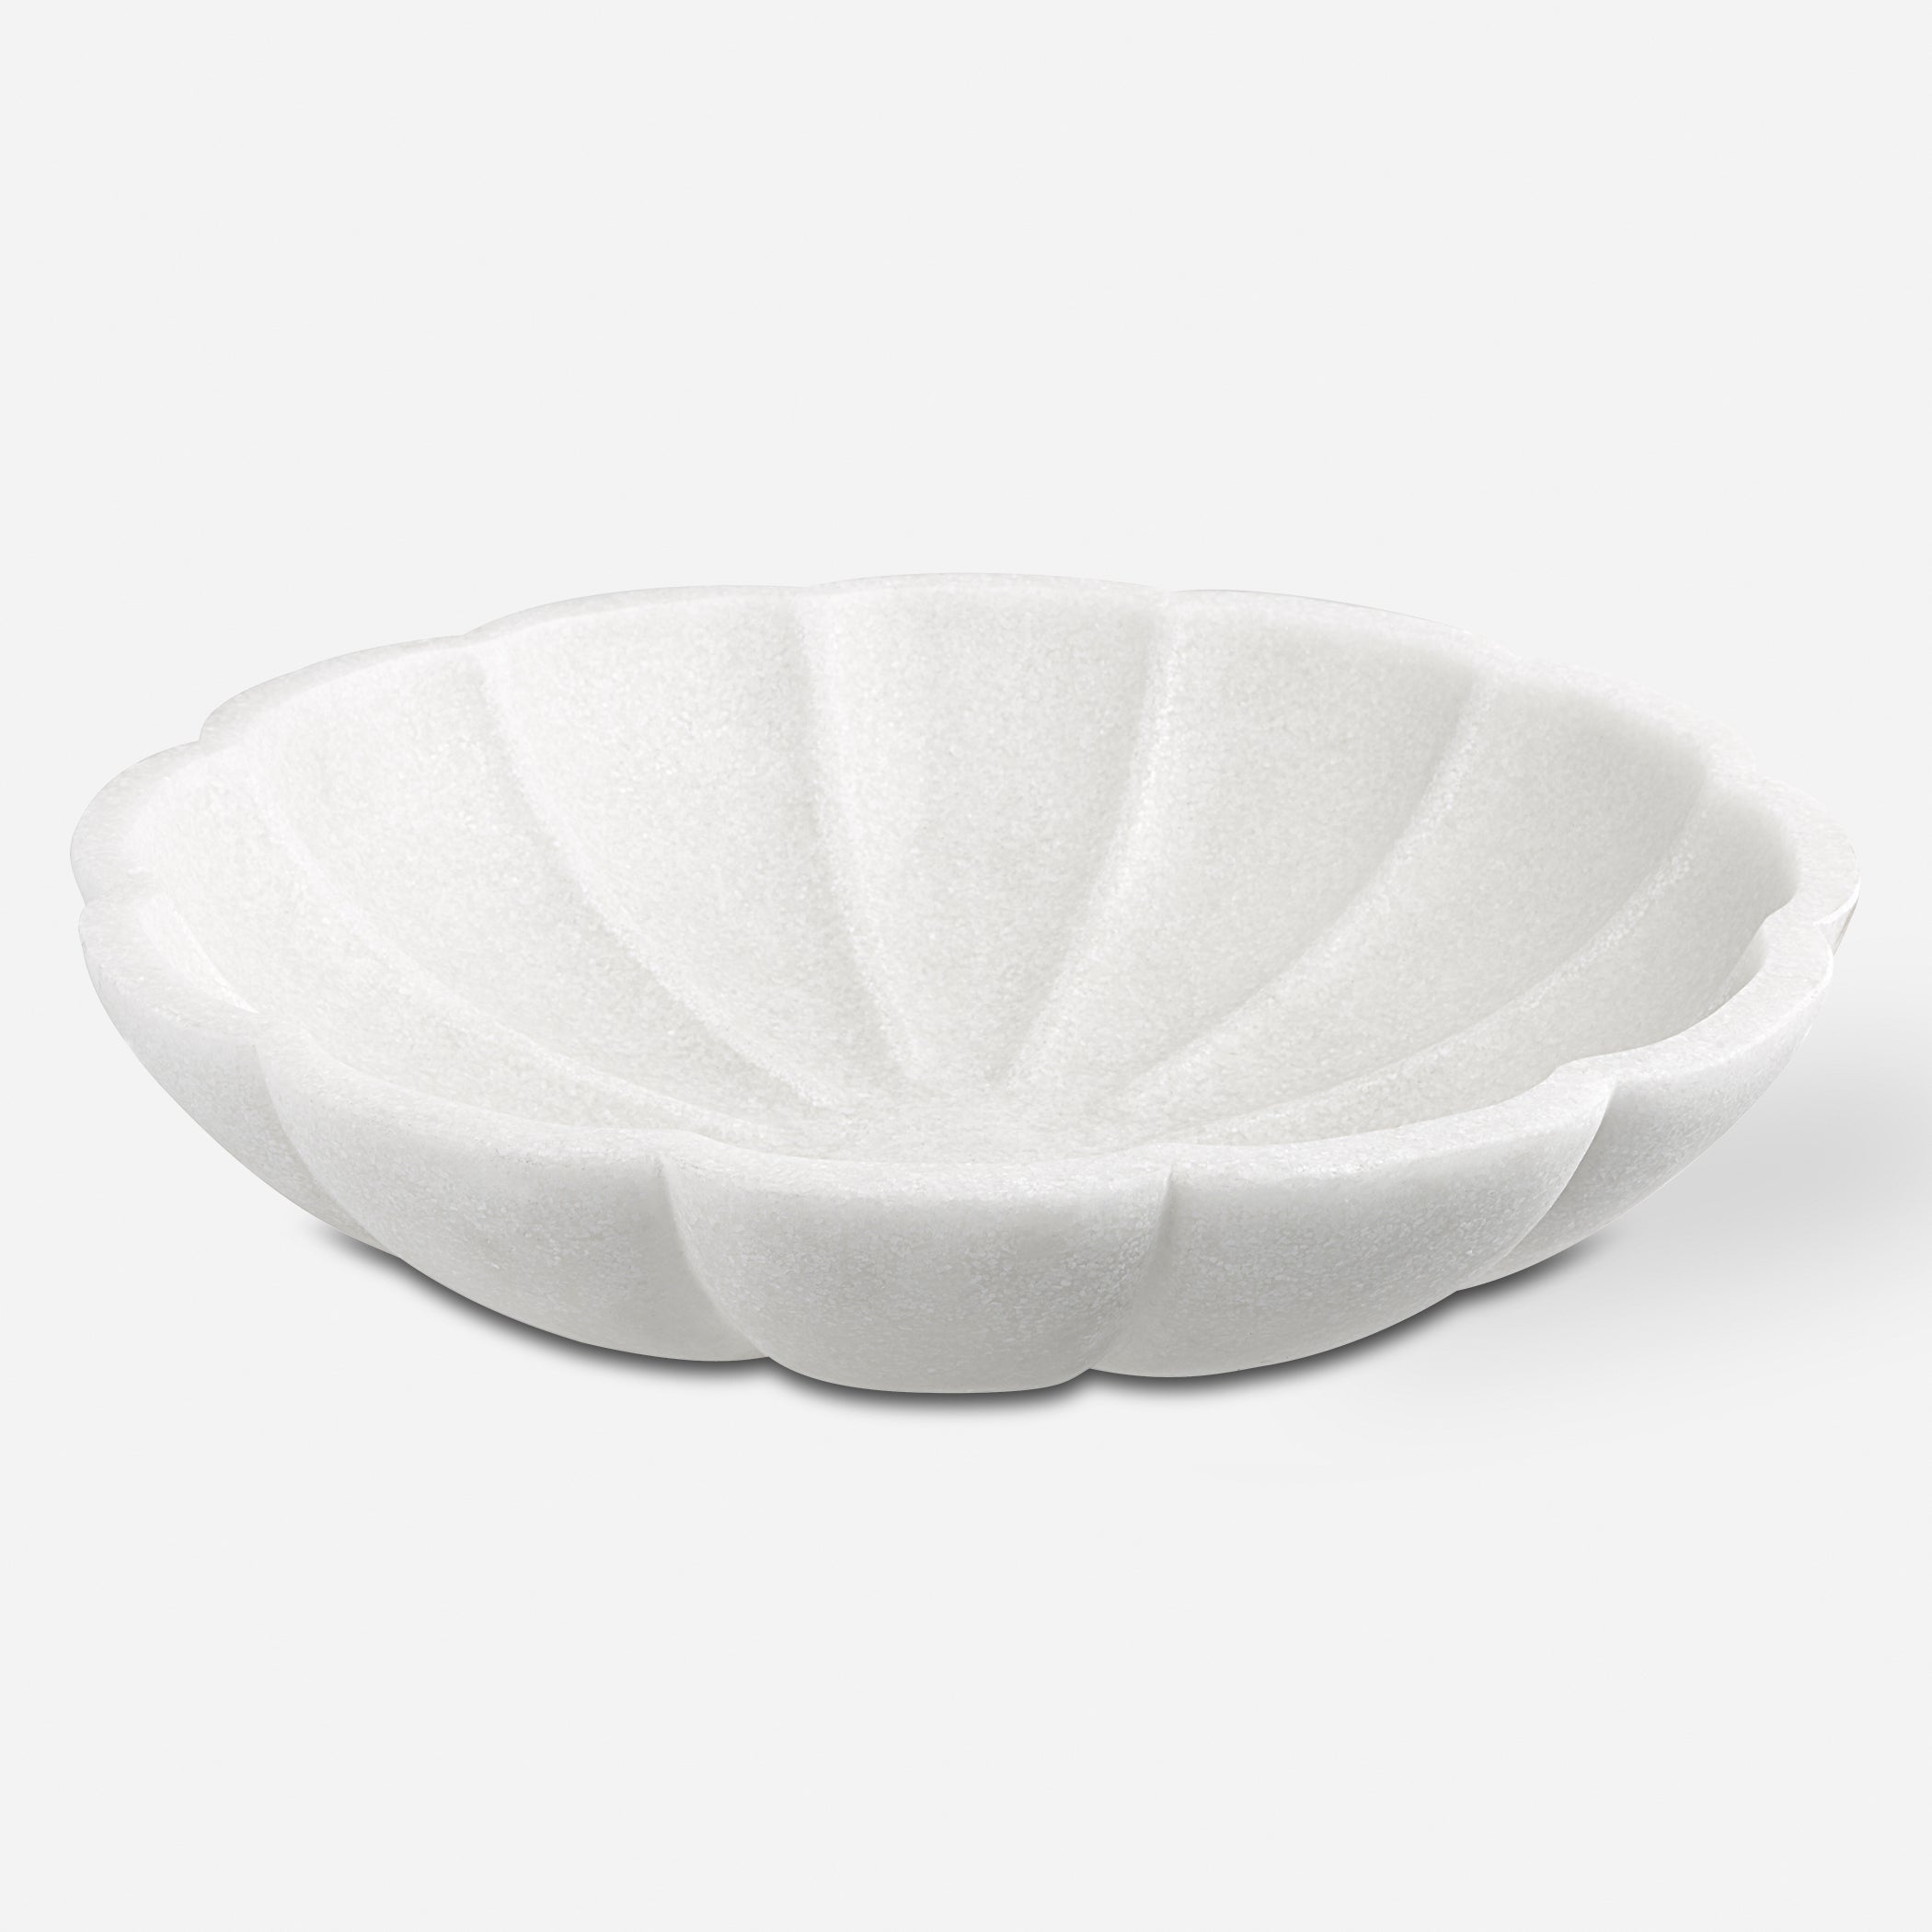 Uttermost Petal Decorative Bowls & Trays Decorative Bowls & Trays Uttermost   